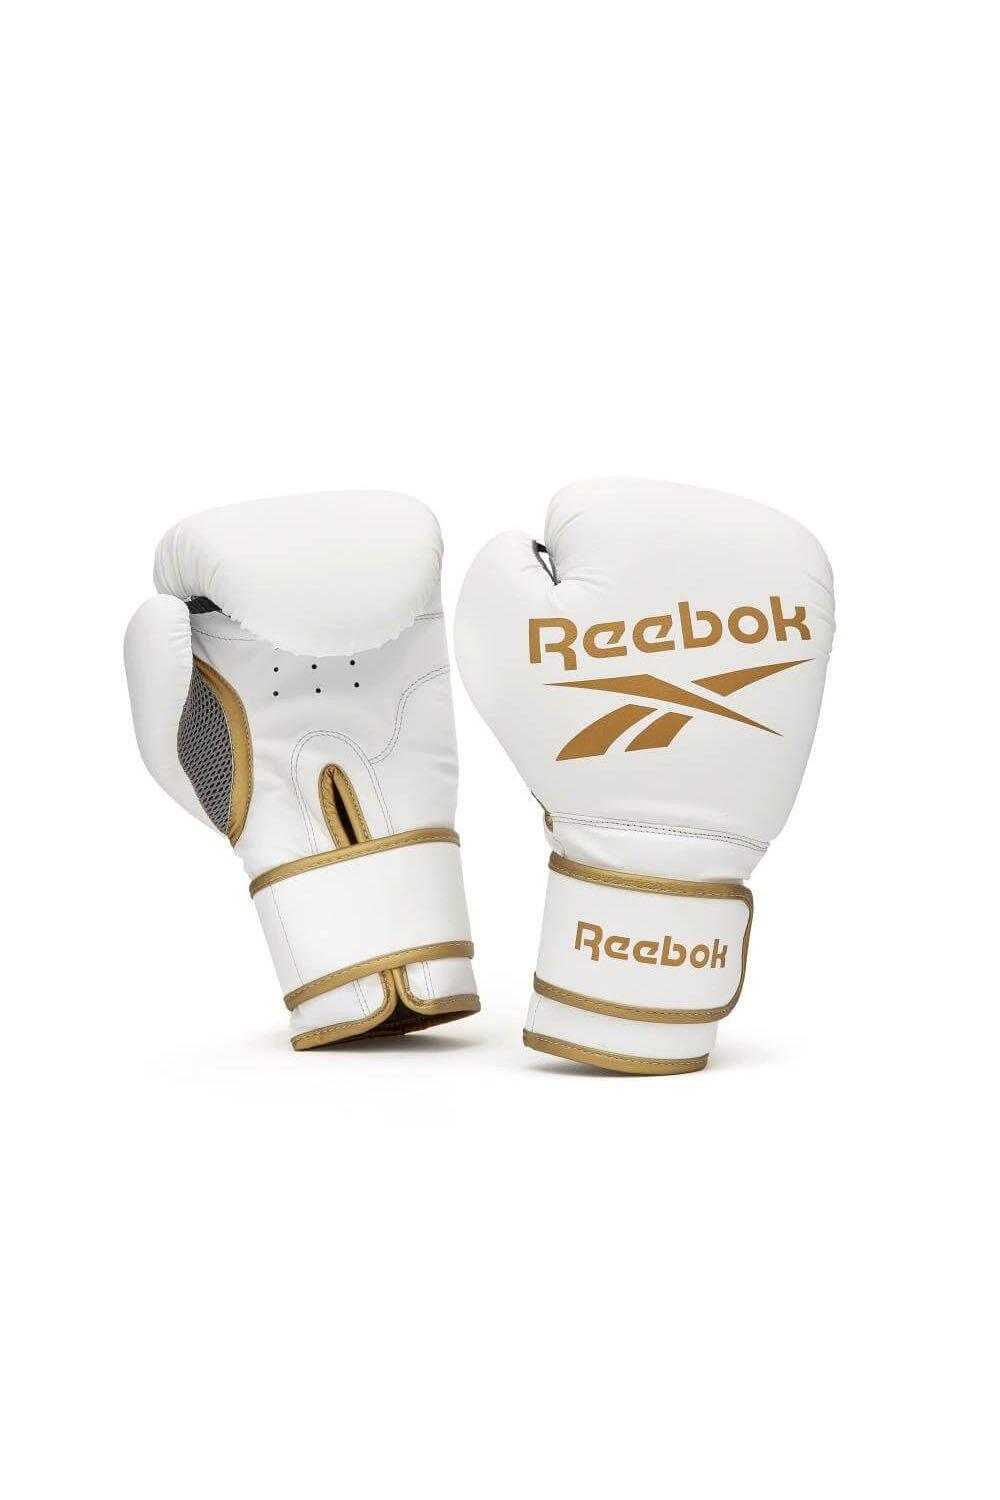 Reebok Boxing Gloves - Gold/White|Size: 12oz|white